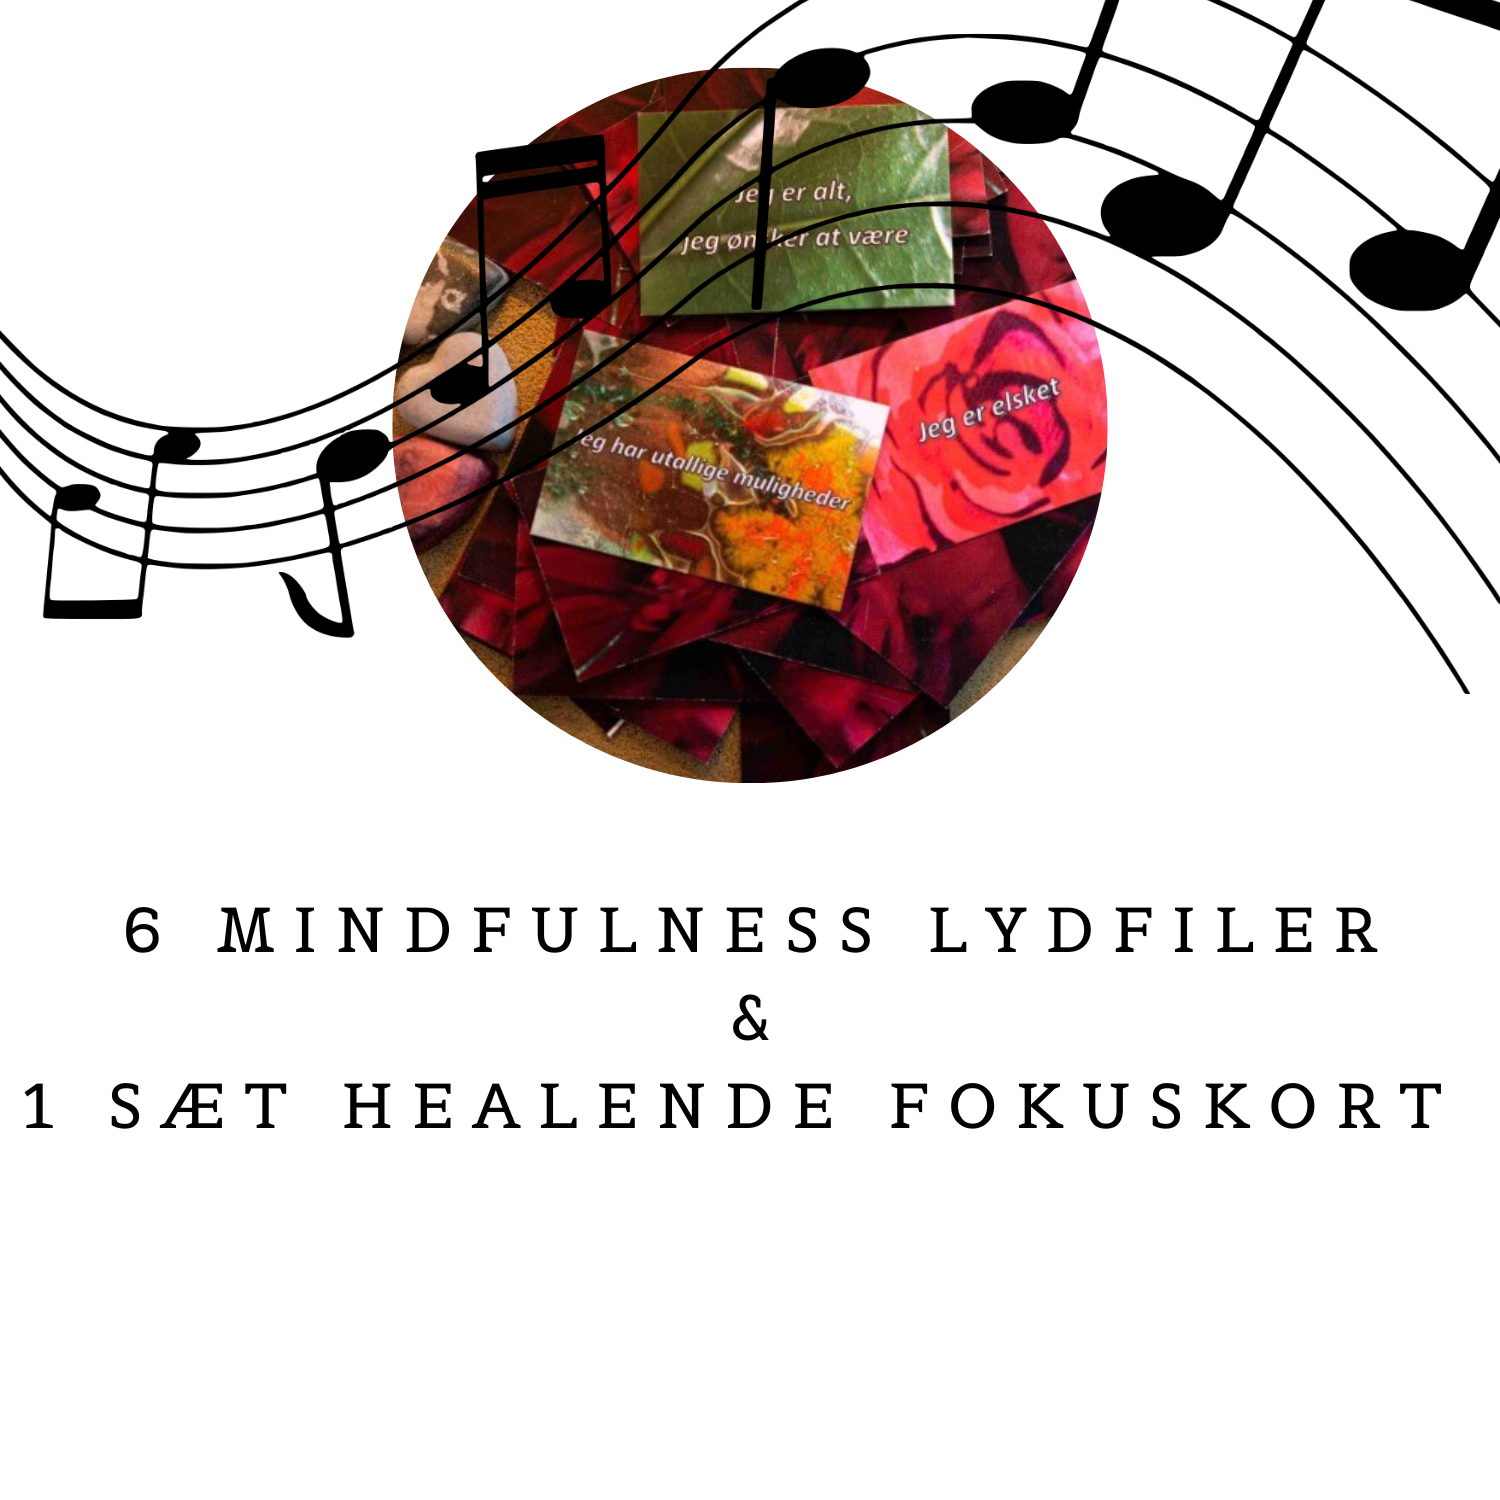 Mindfulness lydfiler